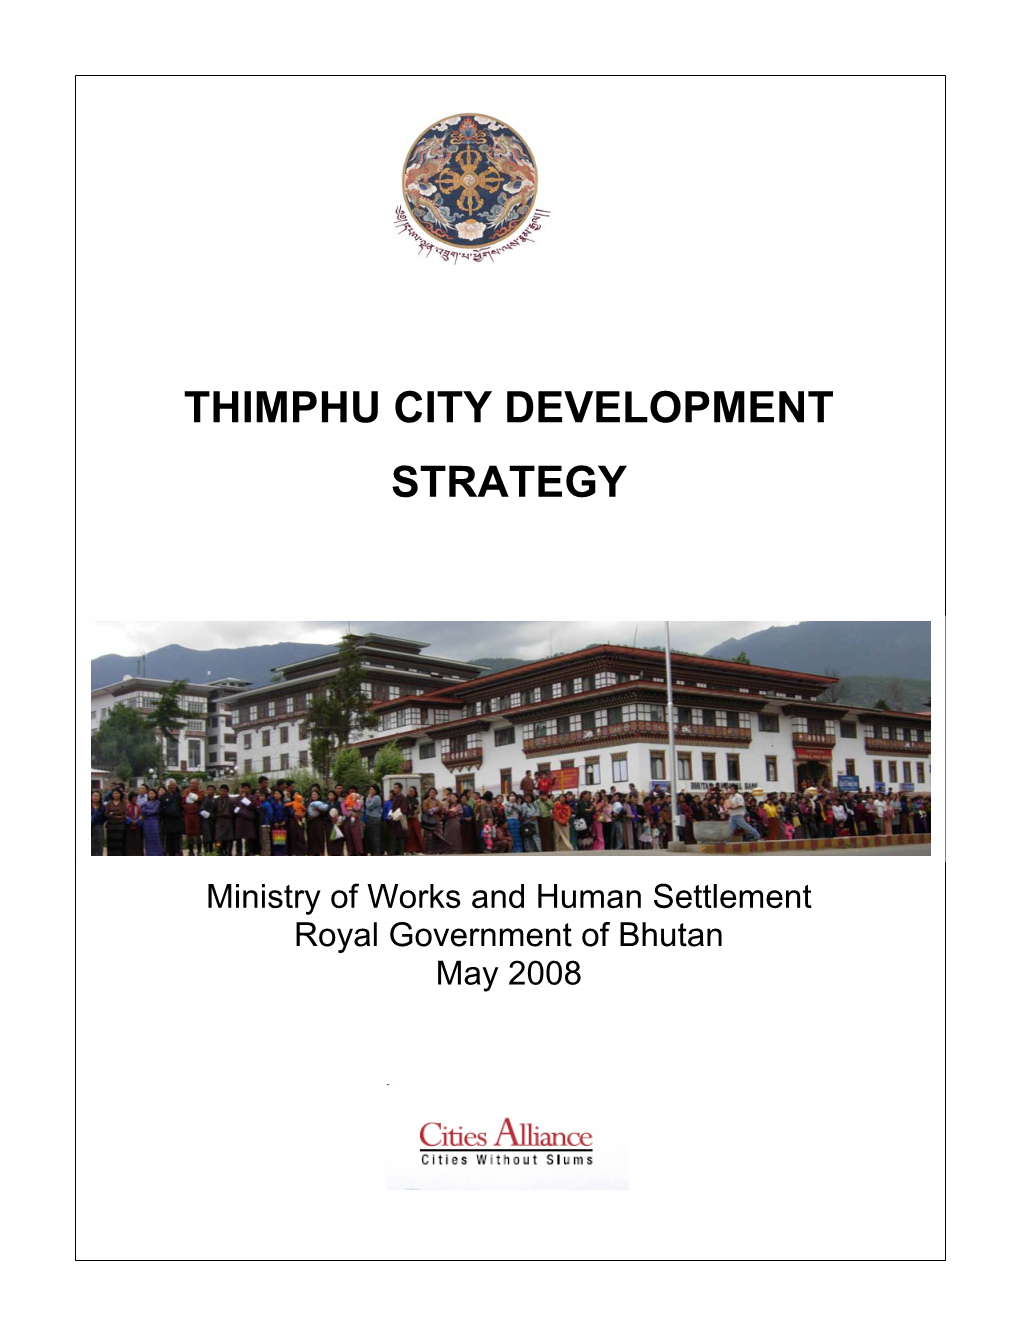 Thimphu City Development Strategy